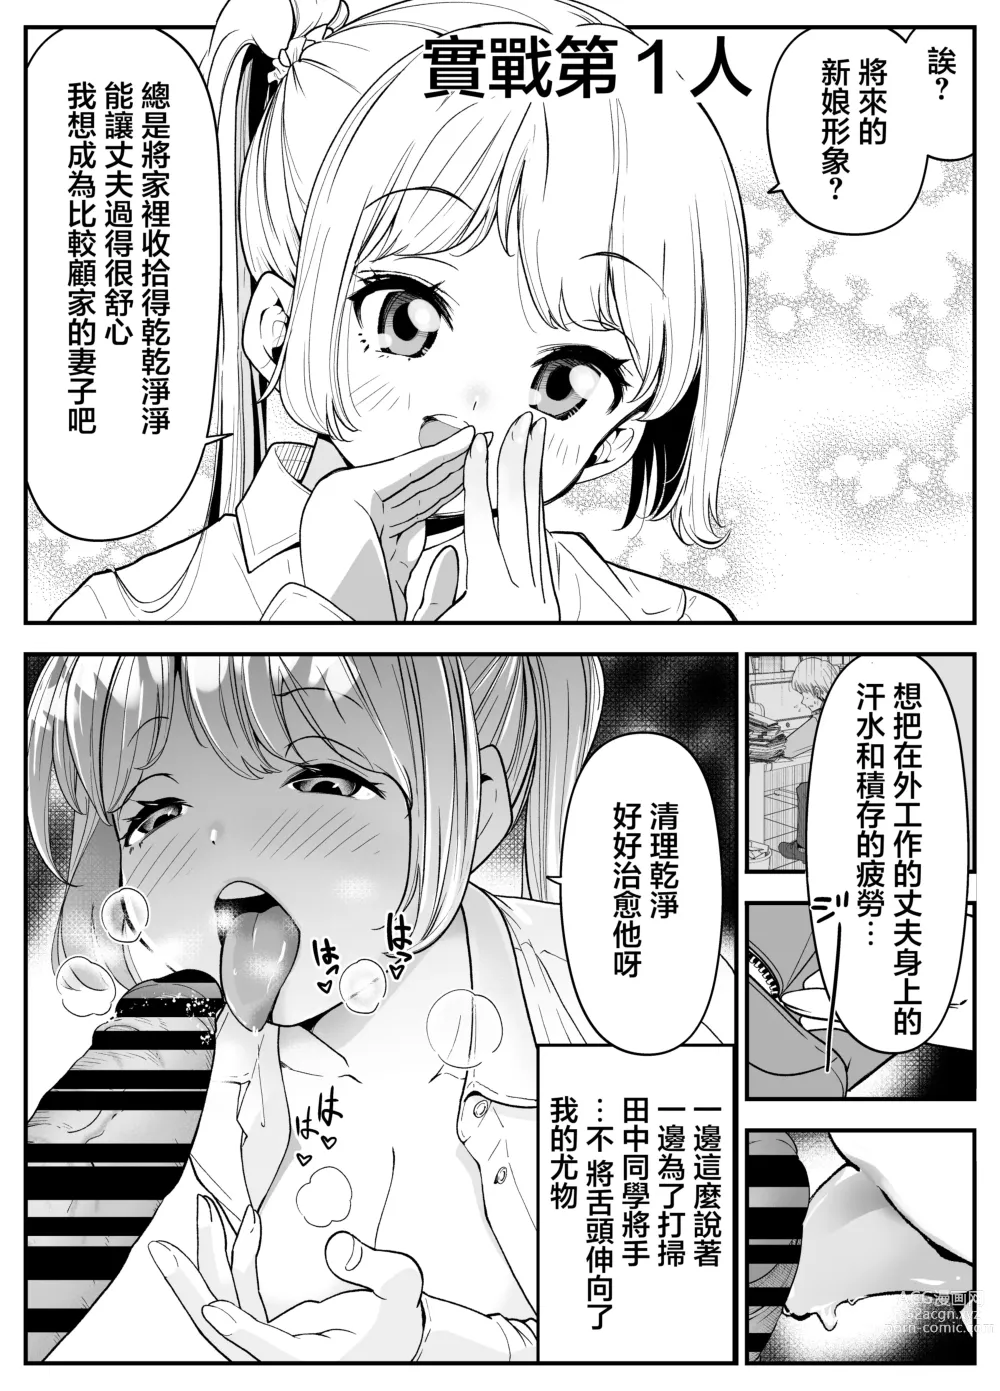 Page 5 of doujinshi 反正結婚之後大家都會SEX要不要和同學一起練習一下?